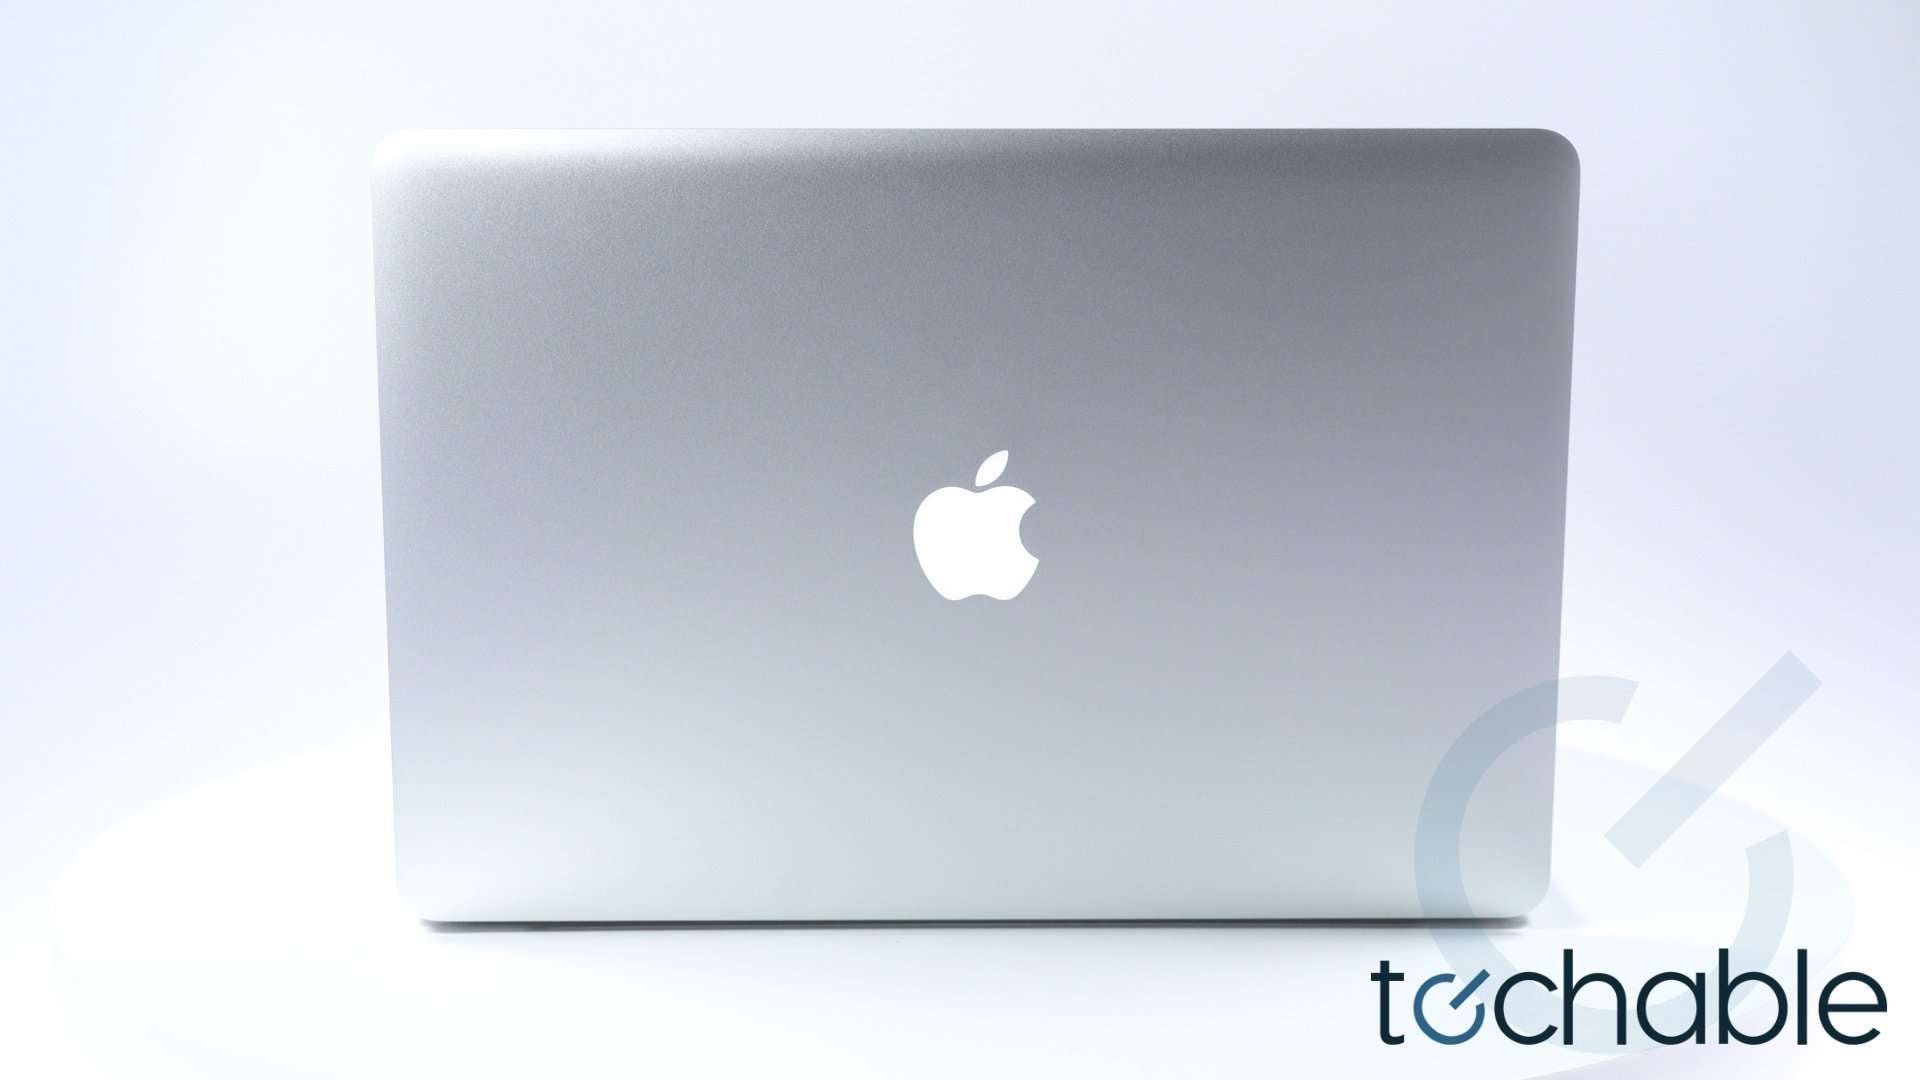 Apple MacBook Pro 15-inch (Mid 2015) 2.5GHz Core i7 16GB RAM MJLT2LL/A (Dual Graphics)